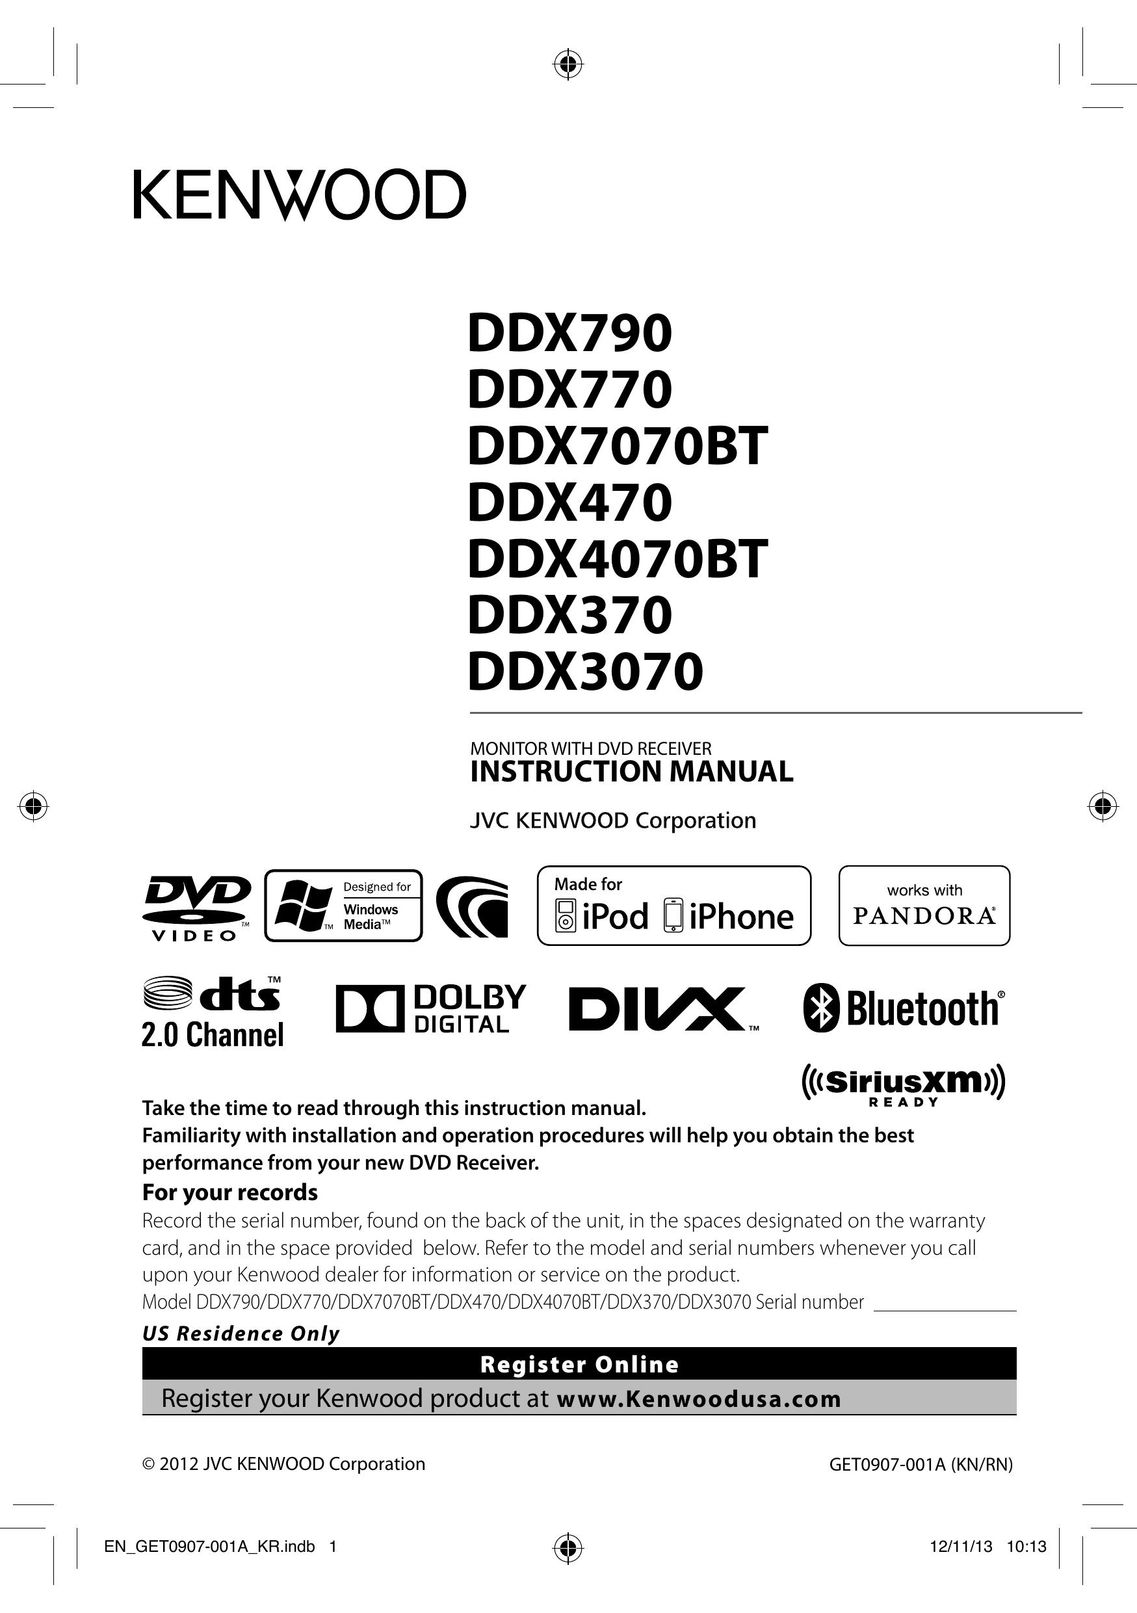 Kenwood DDX4070BT Computer Monitor User Manual